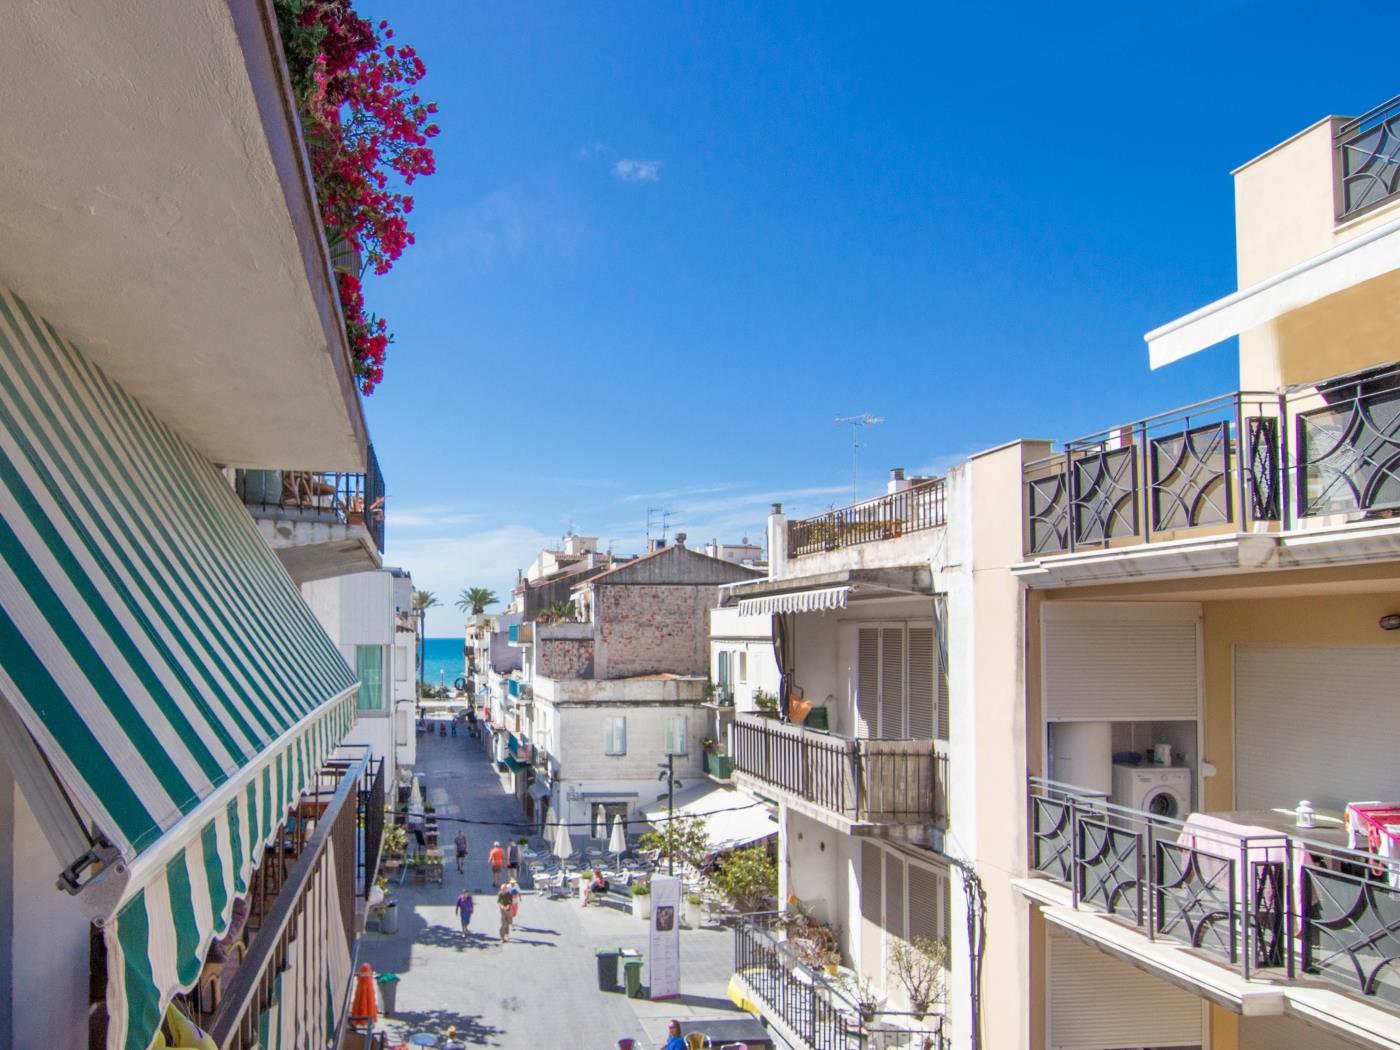 CHILL OUT BY BLAUSITGES Agradable apartamento con gran terraza en Sitges. en SITGES